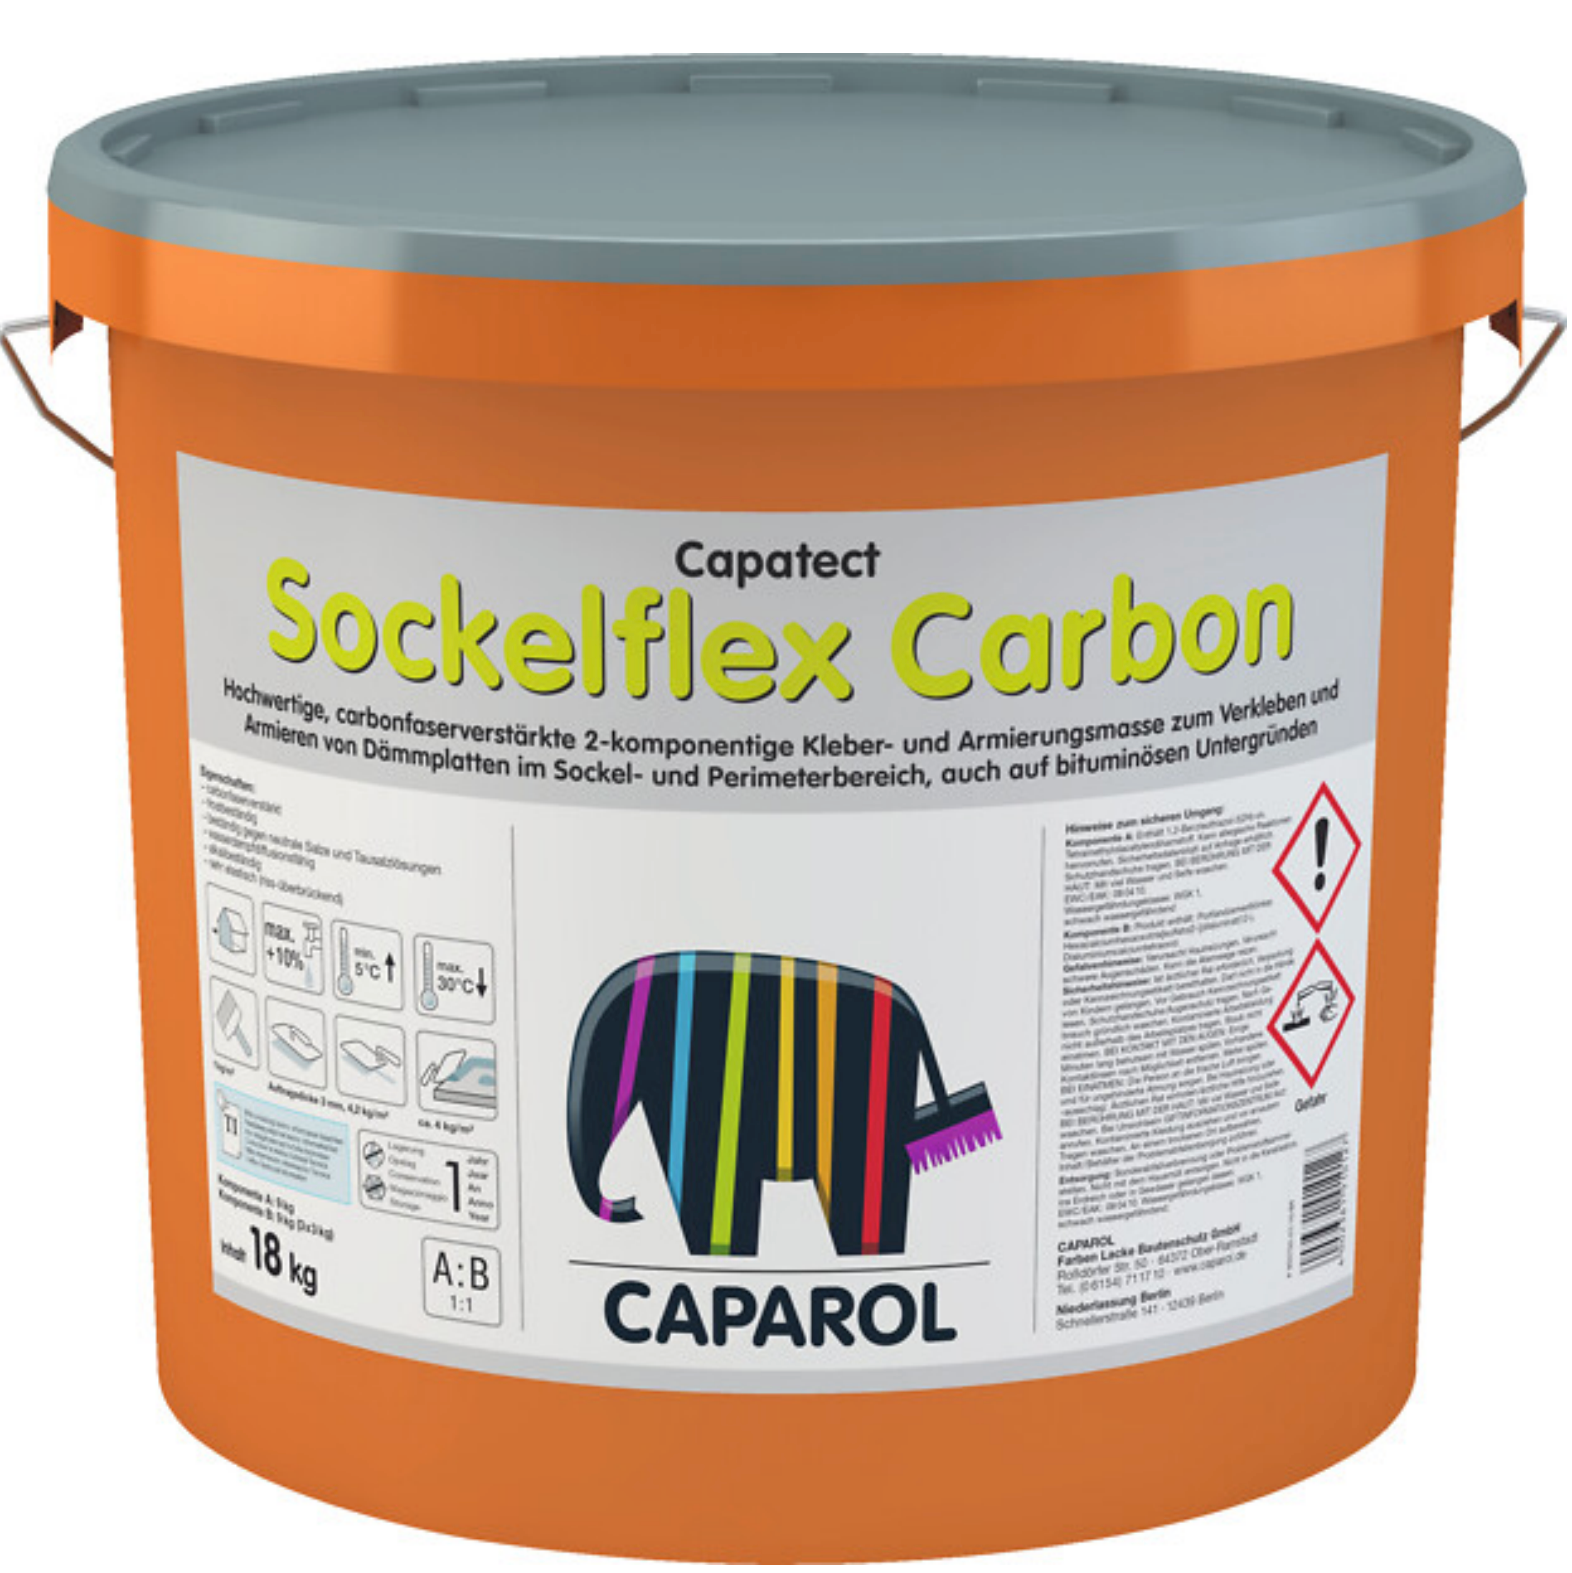 Caparol Capatect SockelFlex Carbon, 18kg